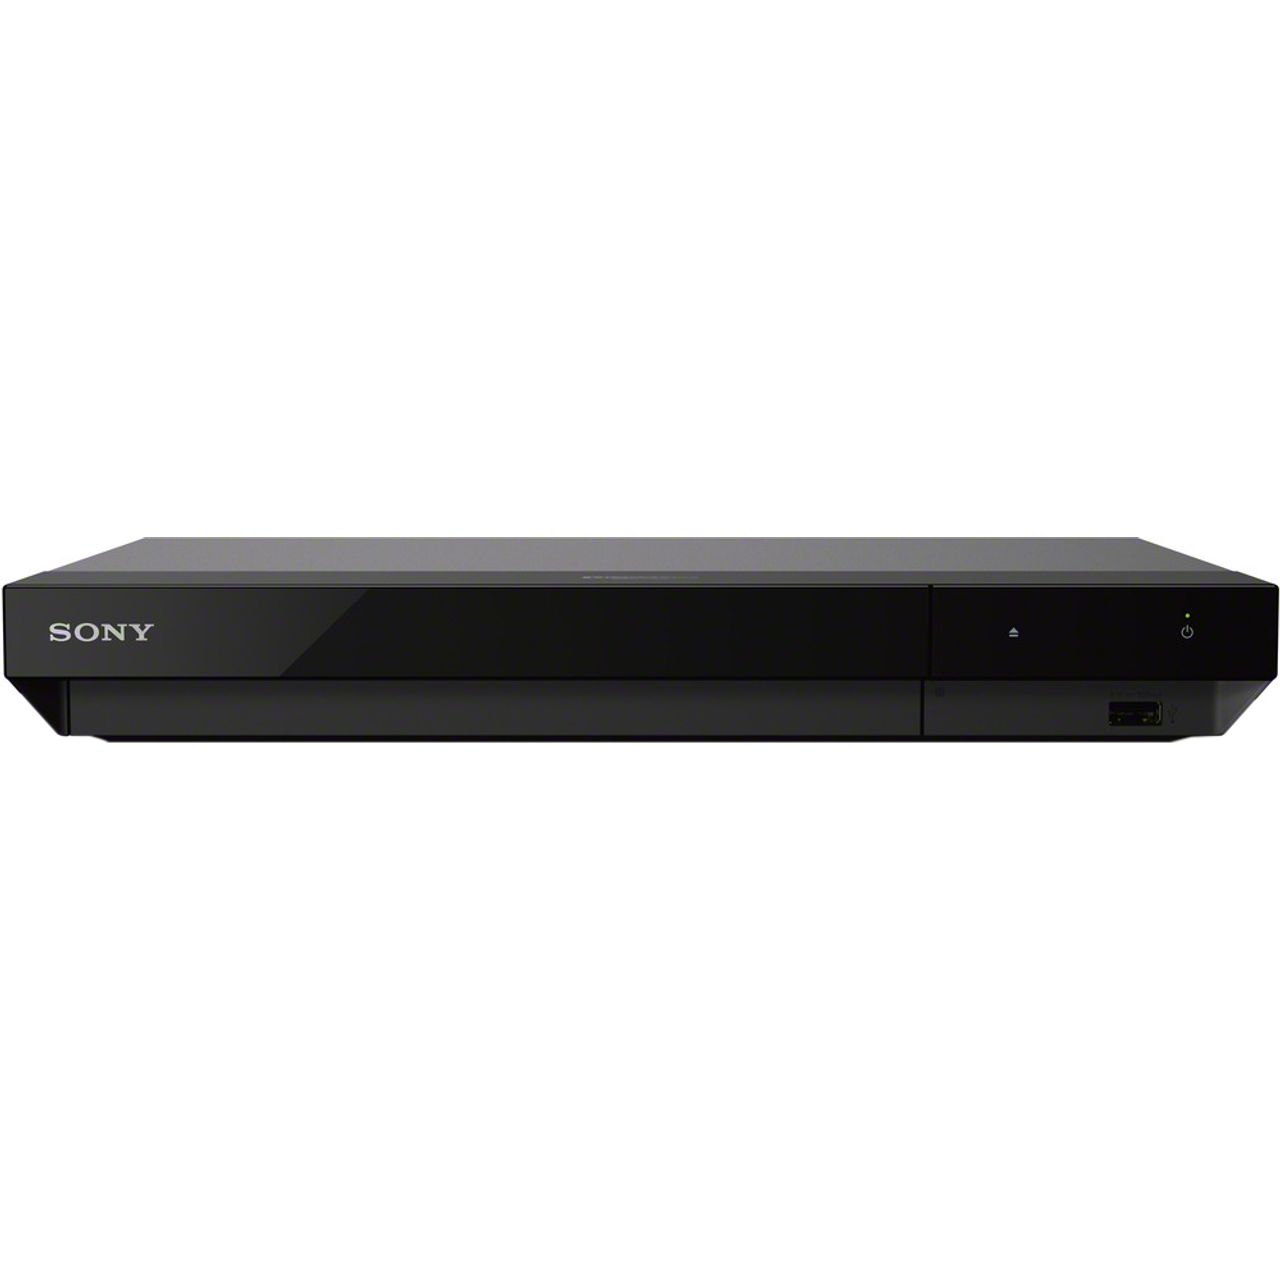 Sony UBP-X500 4K Ultra HD Blu-ray Player Review